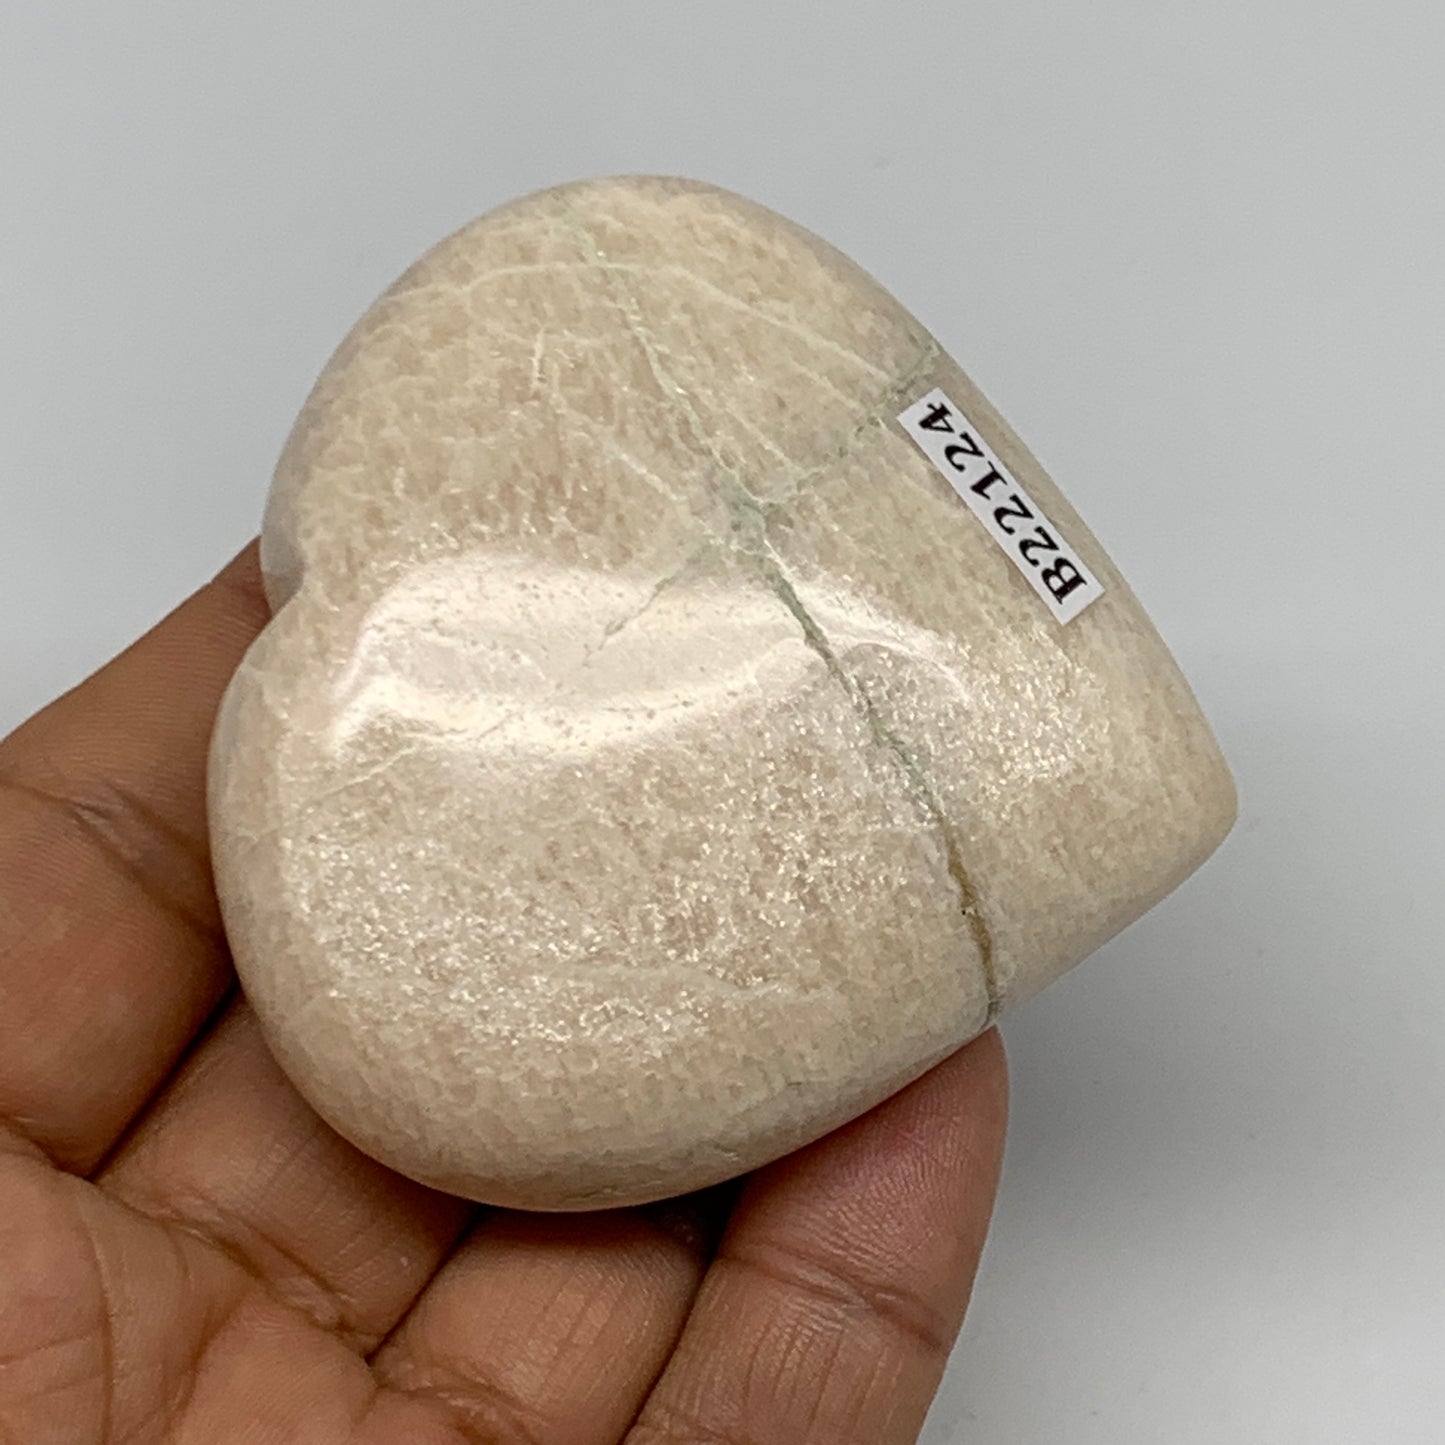 111.8g, 2.4"x2.4"x0.9", White Moonstone Heart Crystal Polished Gemstone, B22124